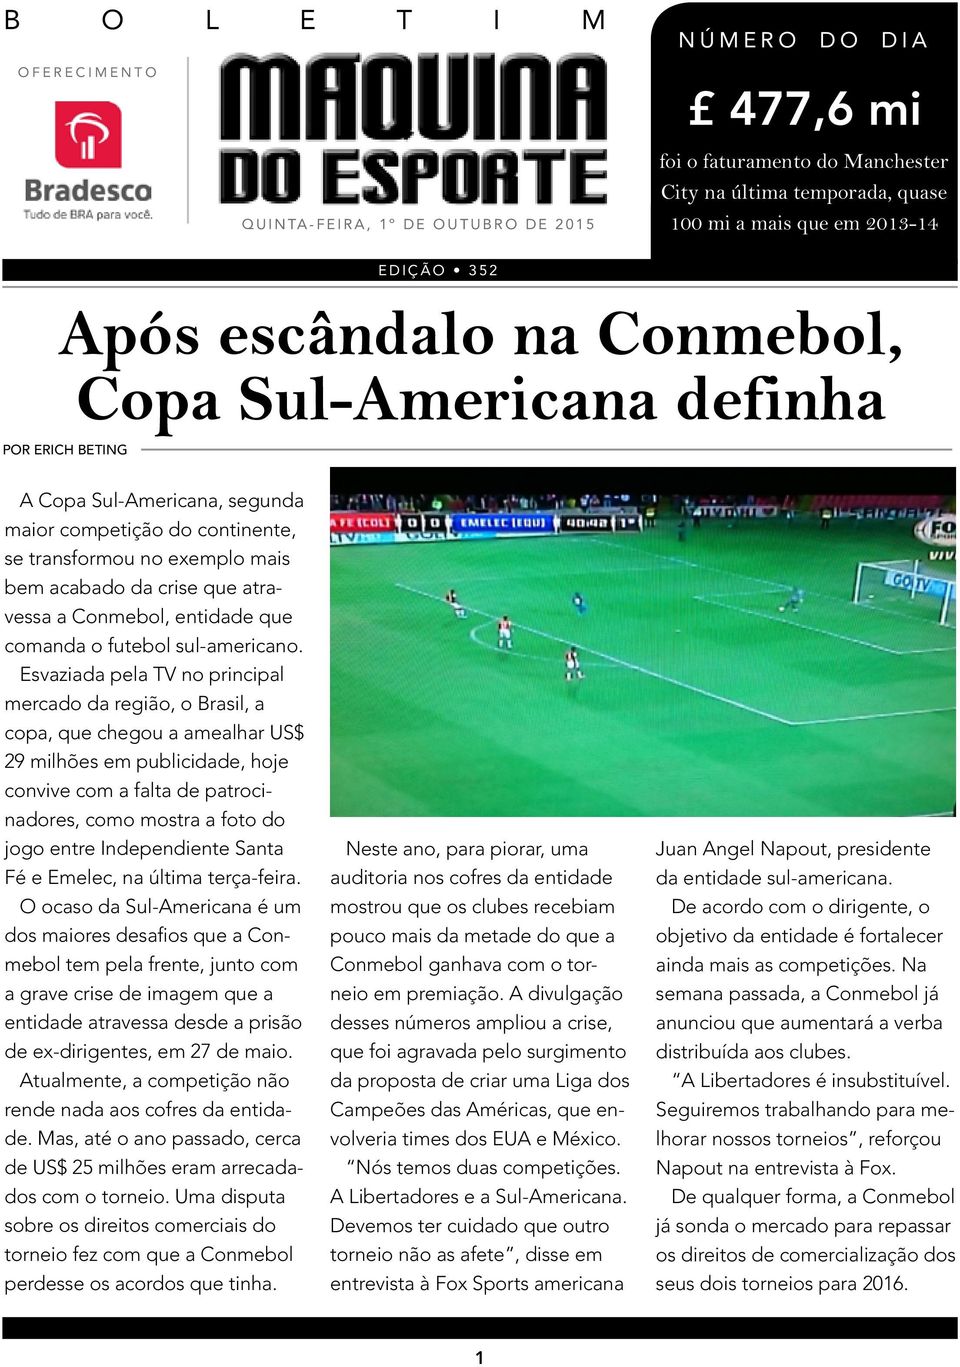 Conmebol, entidade que comanda o futebol sul-americano.